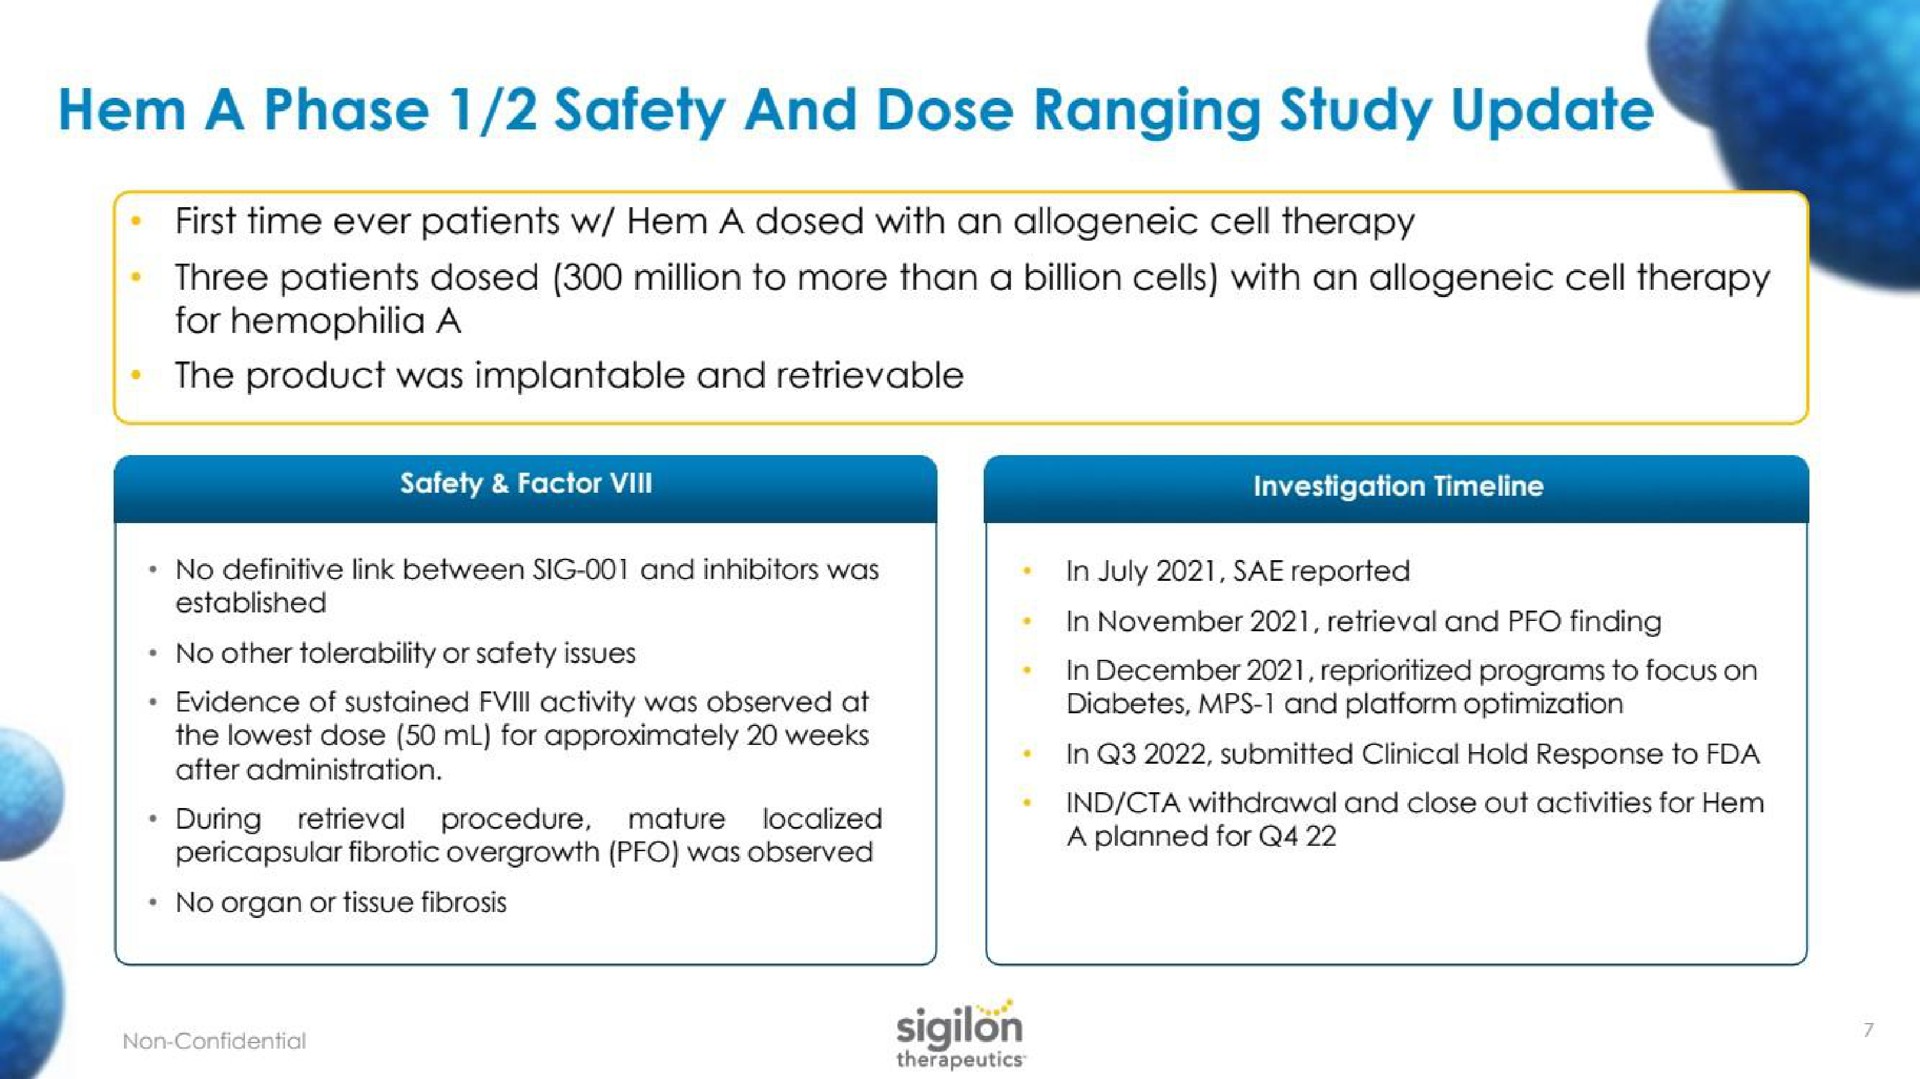 hem a phase safety and dose ranging study update | Sigilon Therapeutics